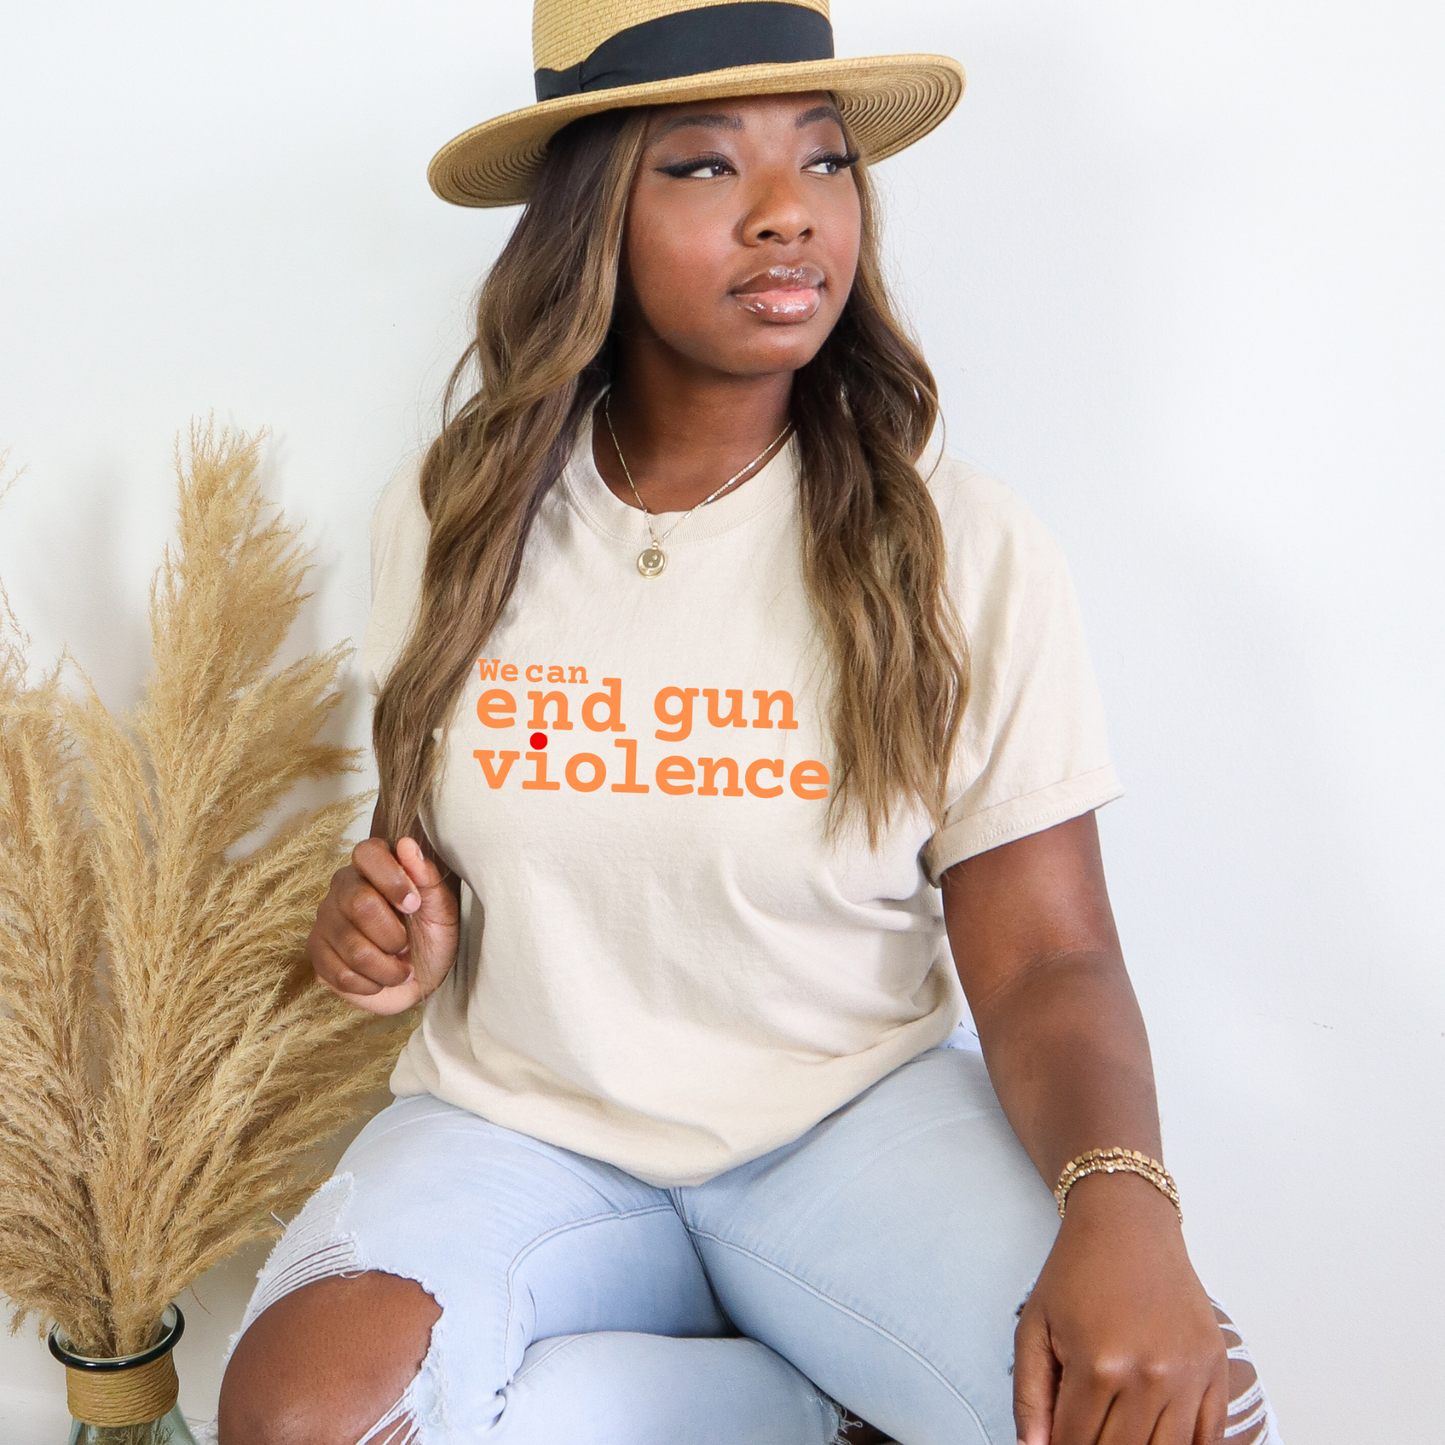 End gun violence tan t-shirt